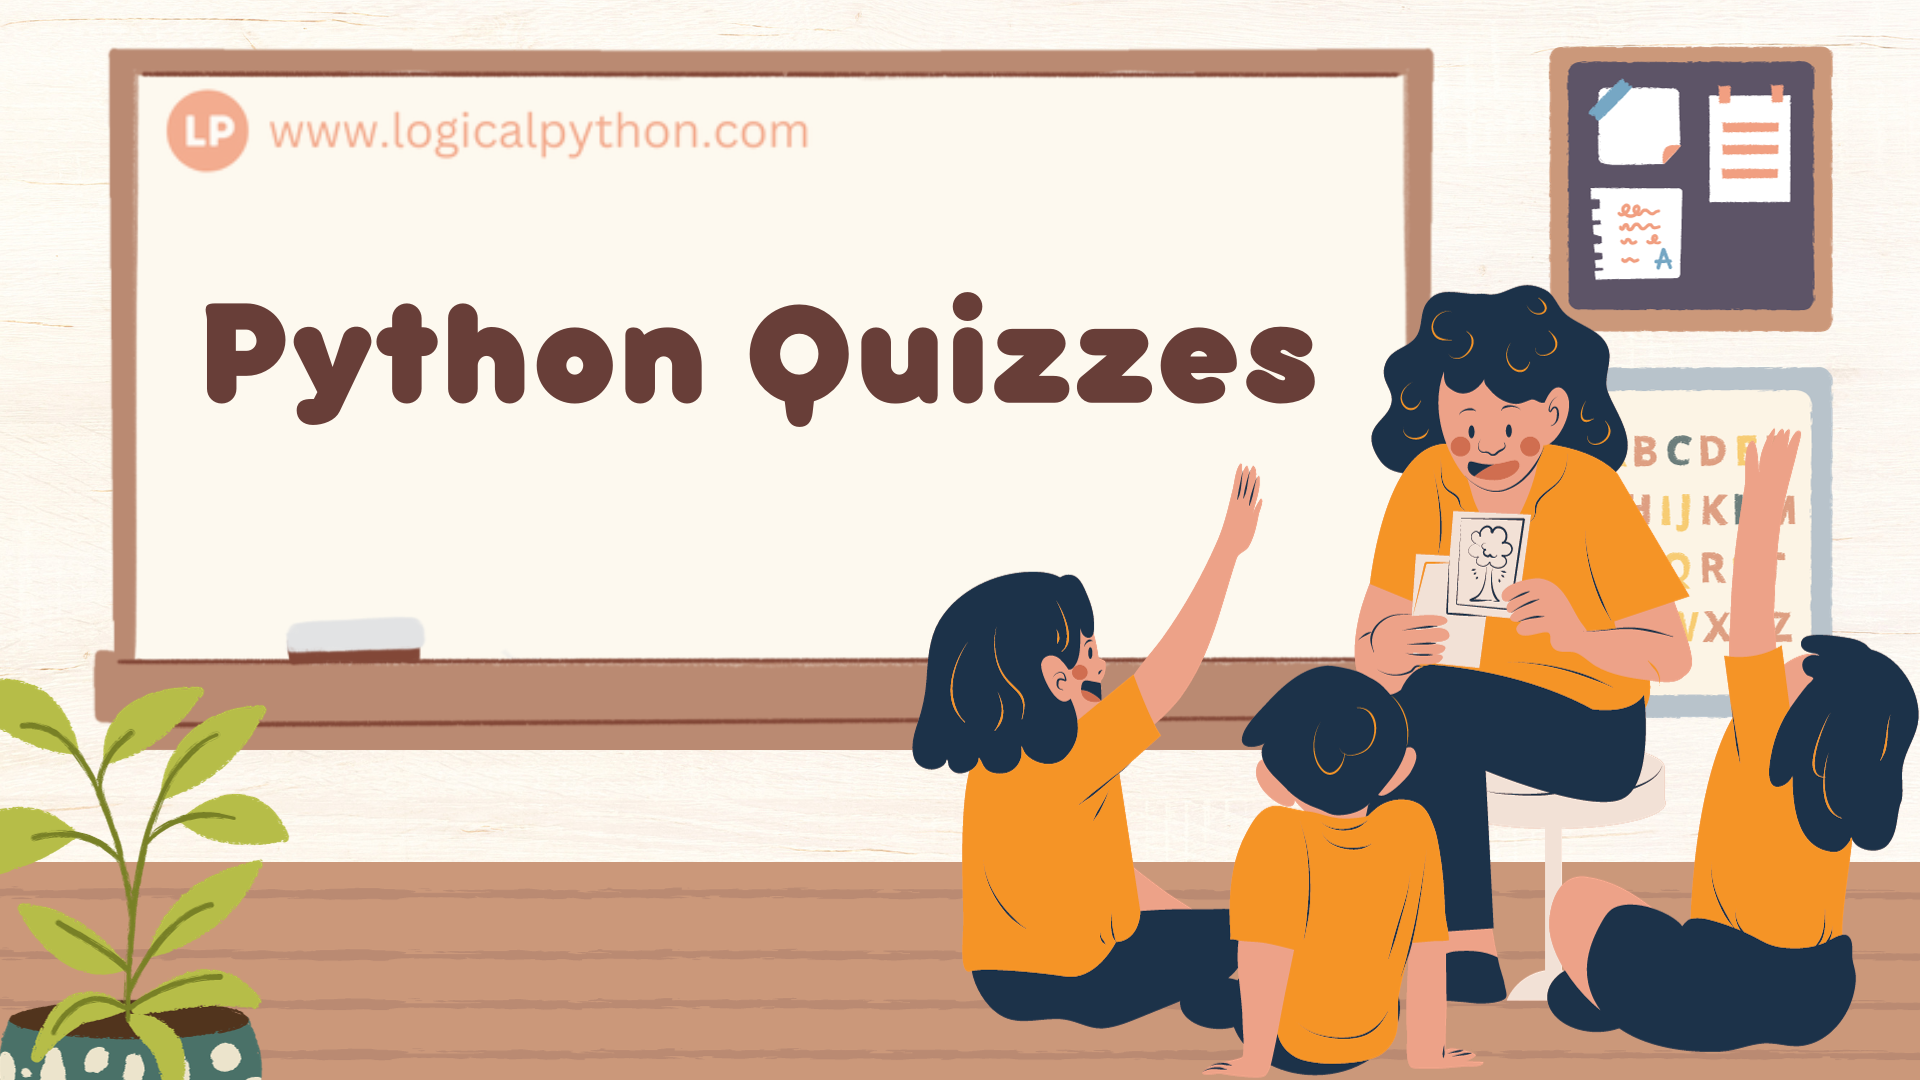 Python Quizzes - Logical Python